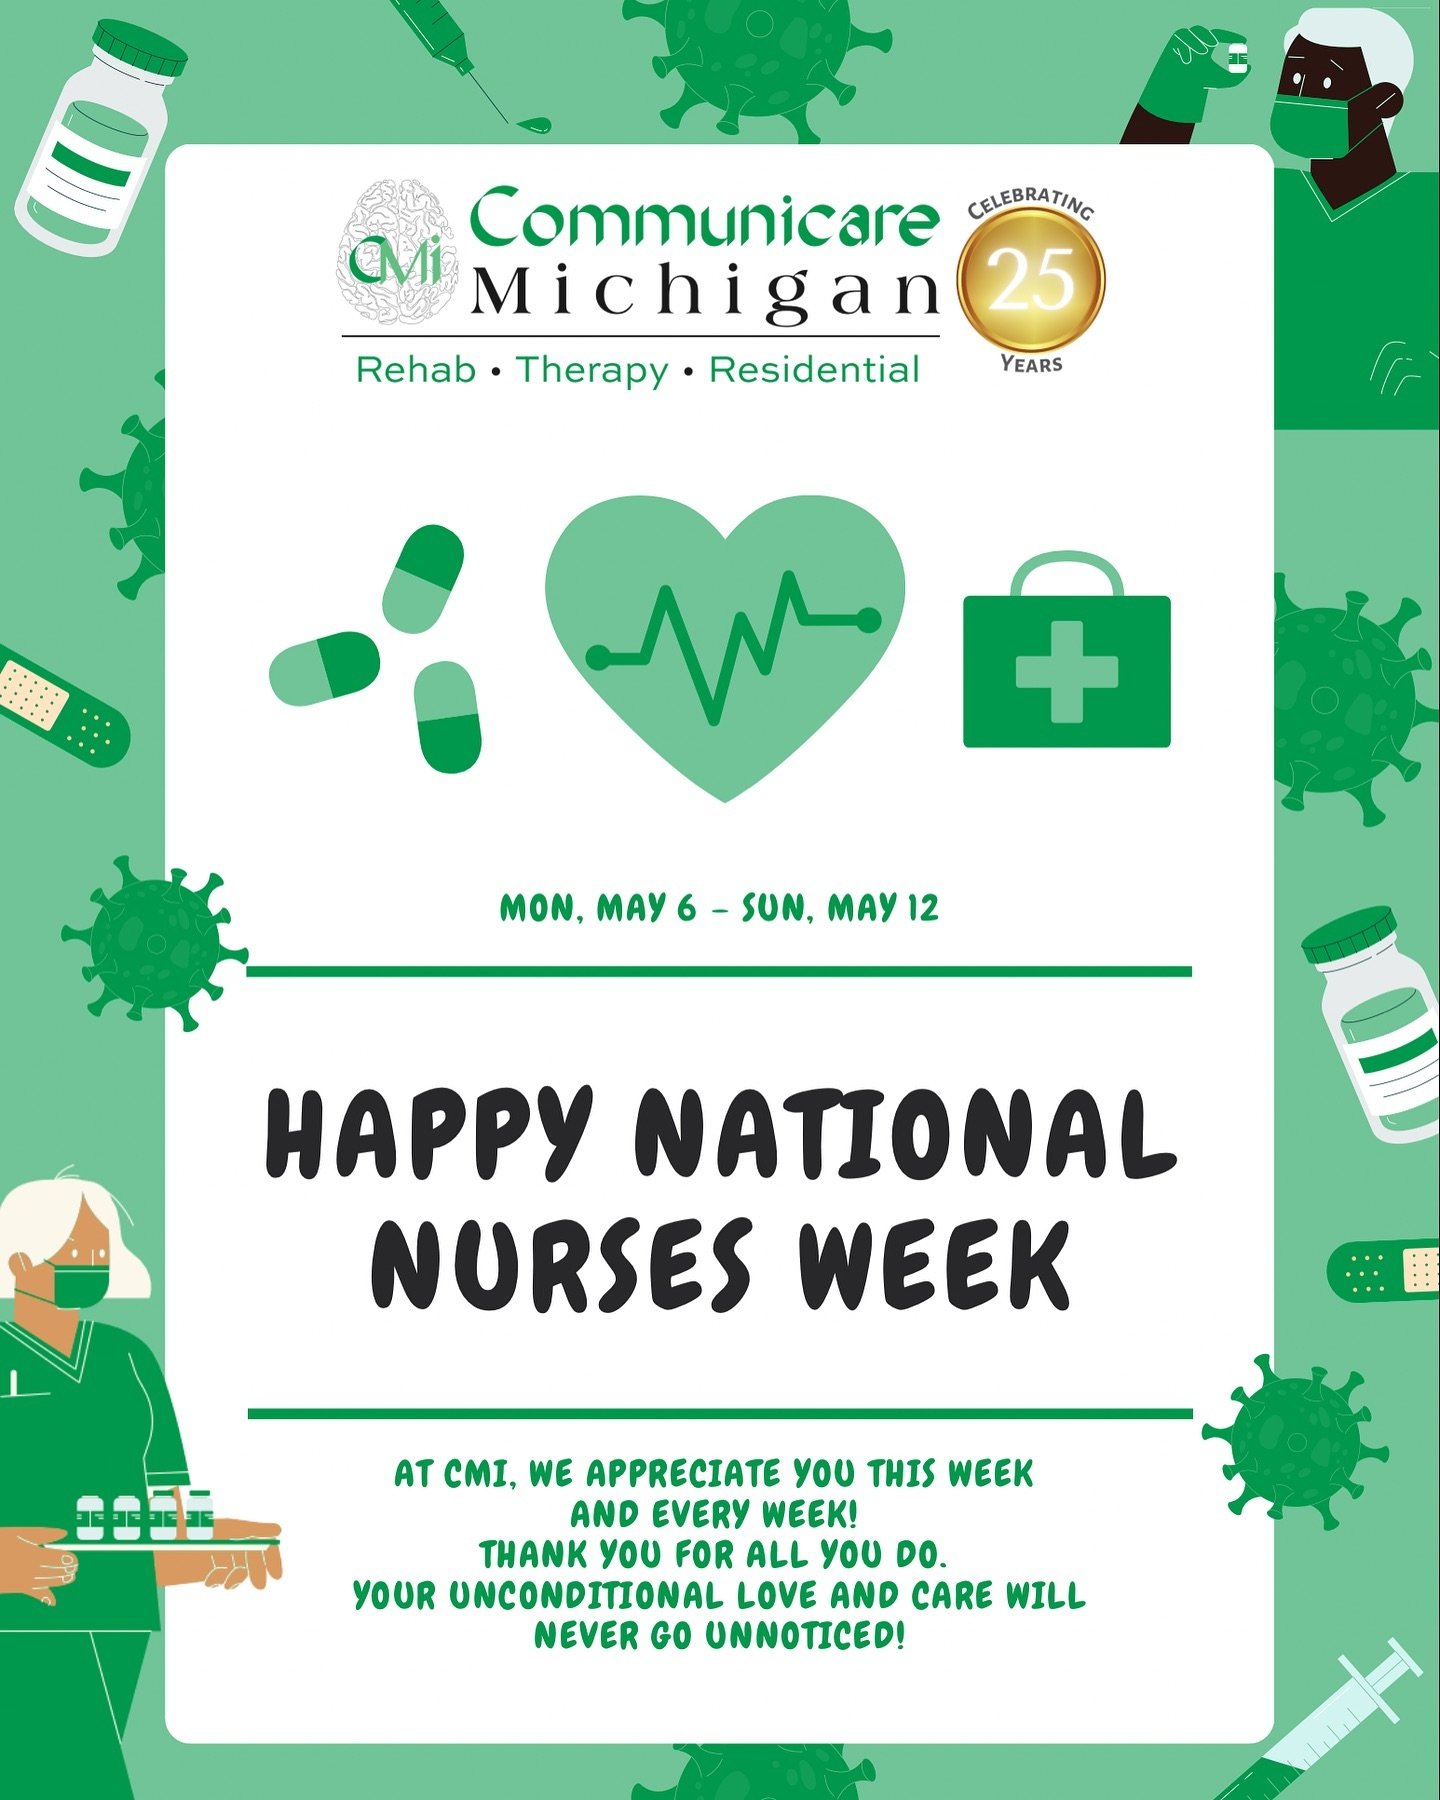 THANK YOU, NURSES 💚
*
*
*
#CMI #nationalnursesweek #nationalnurseweek #TBI #ThankYou #Communicare #appreciationpost #Nurses